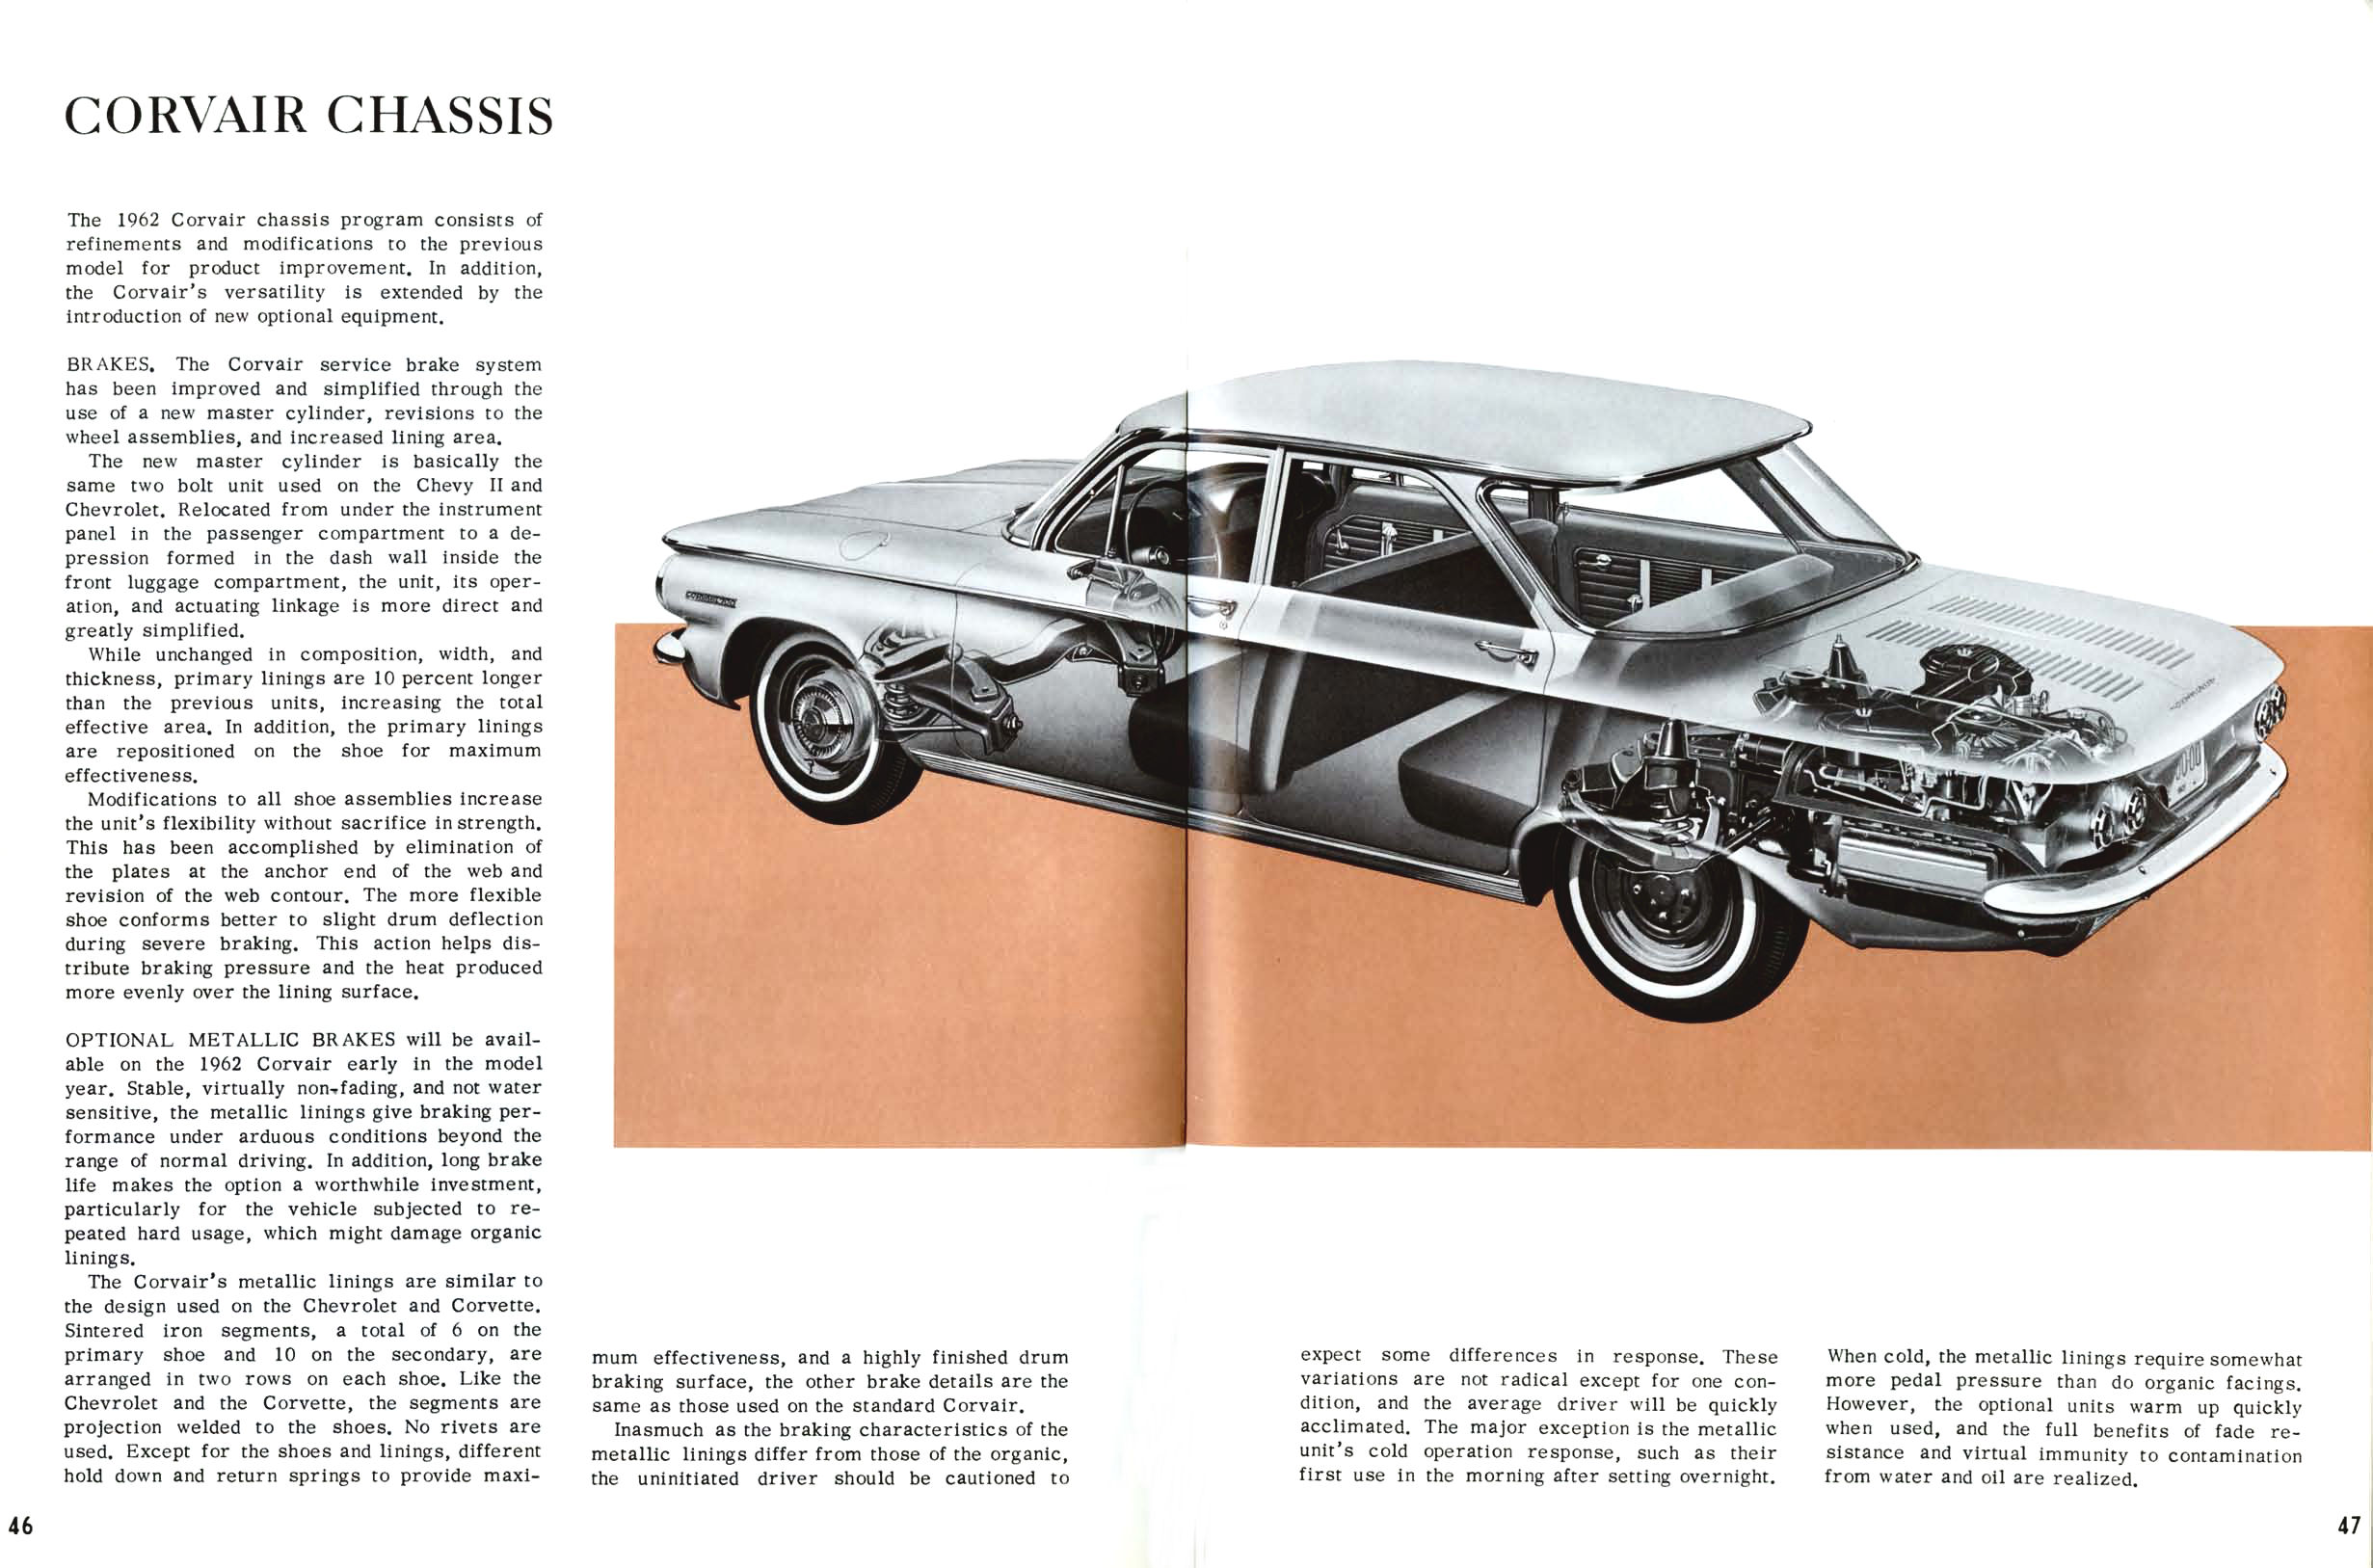 1962_Chevrolet_Engineering_Features-46-47